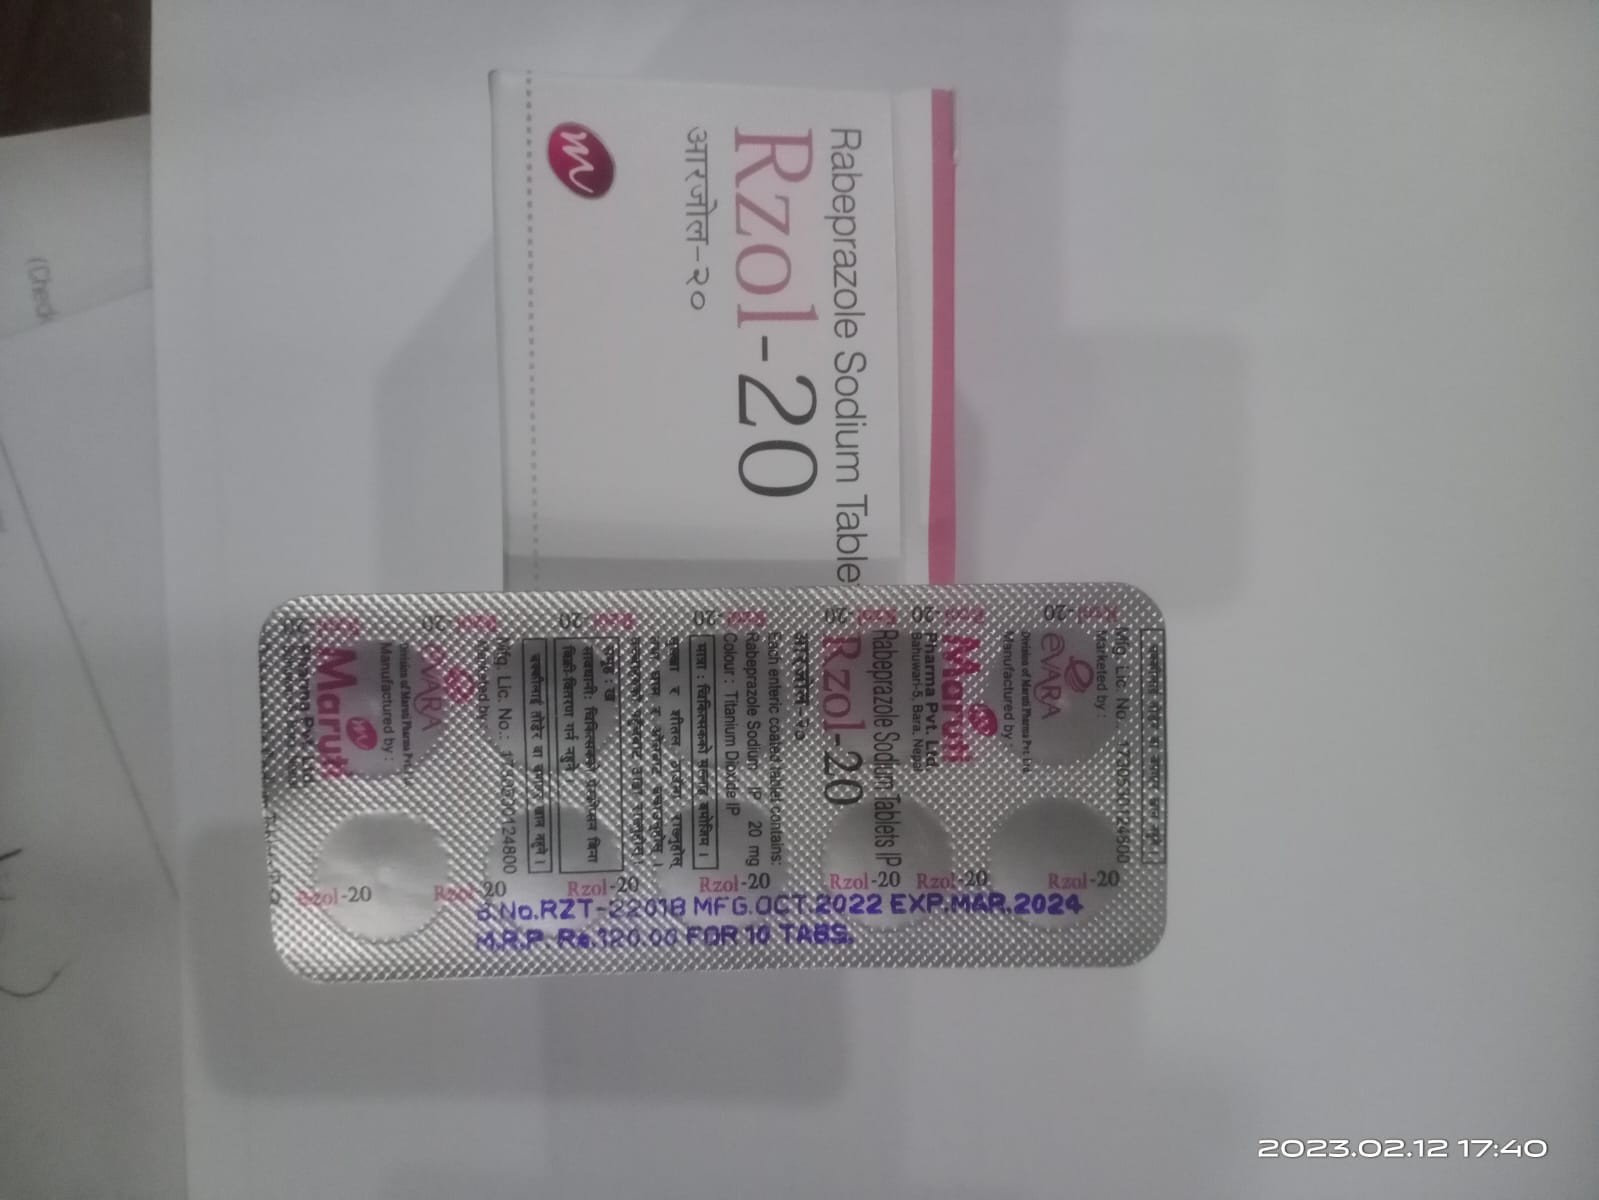 Rzol-20 Tablet